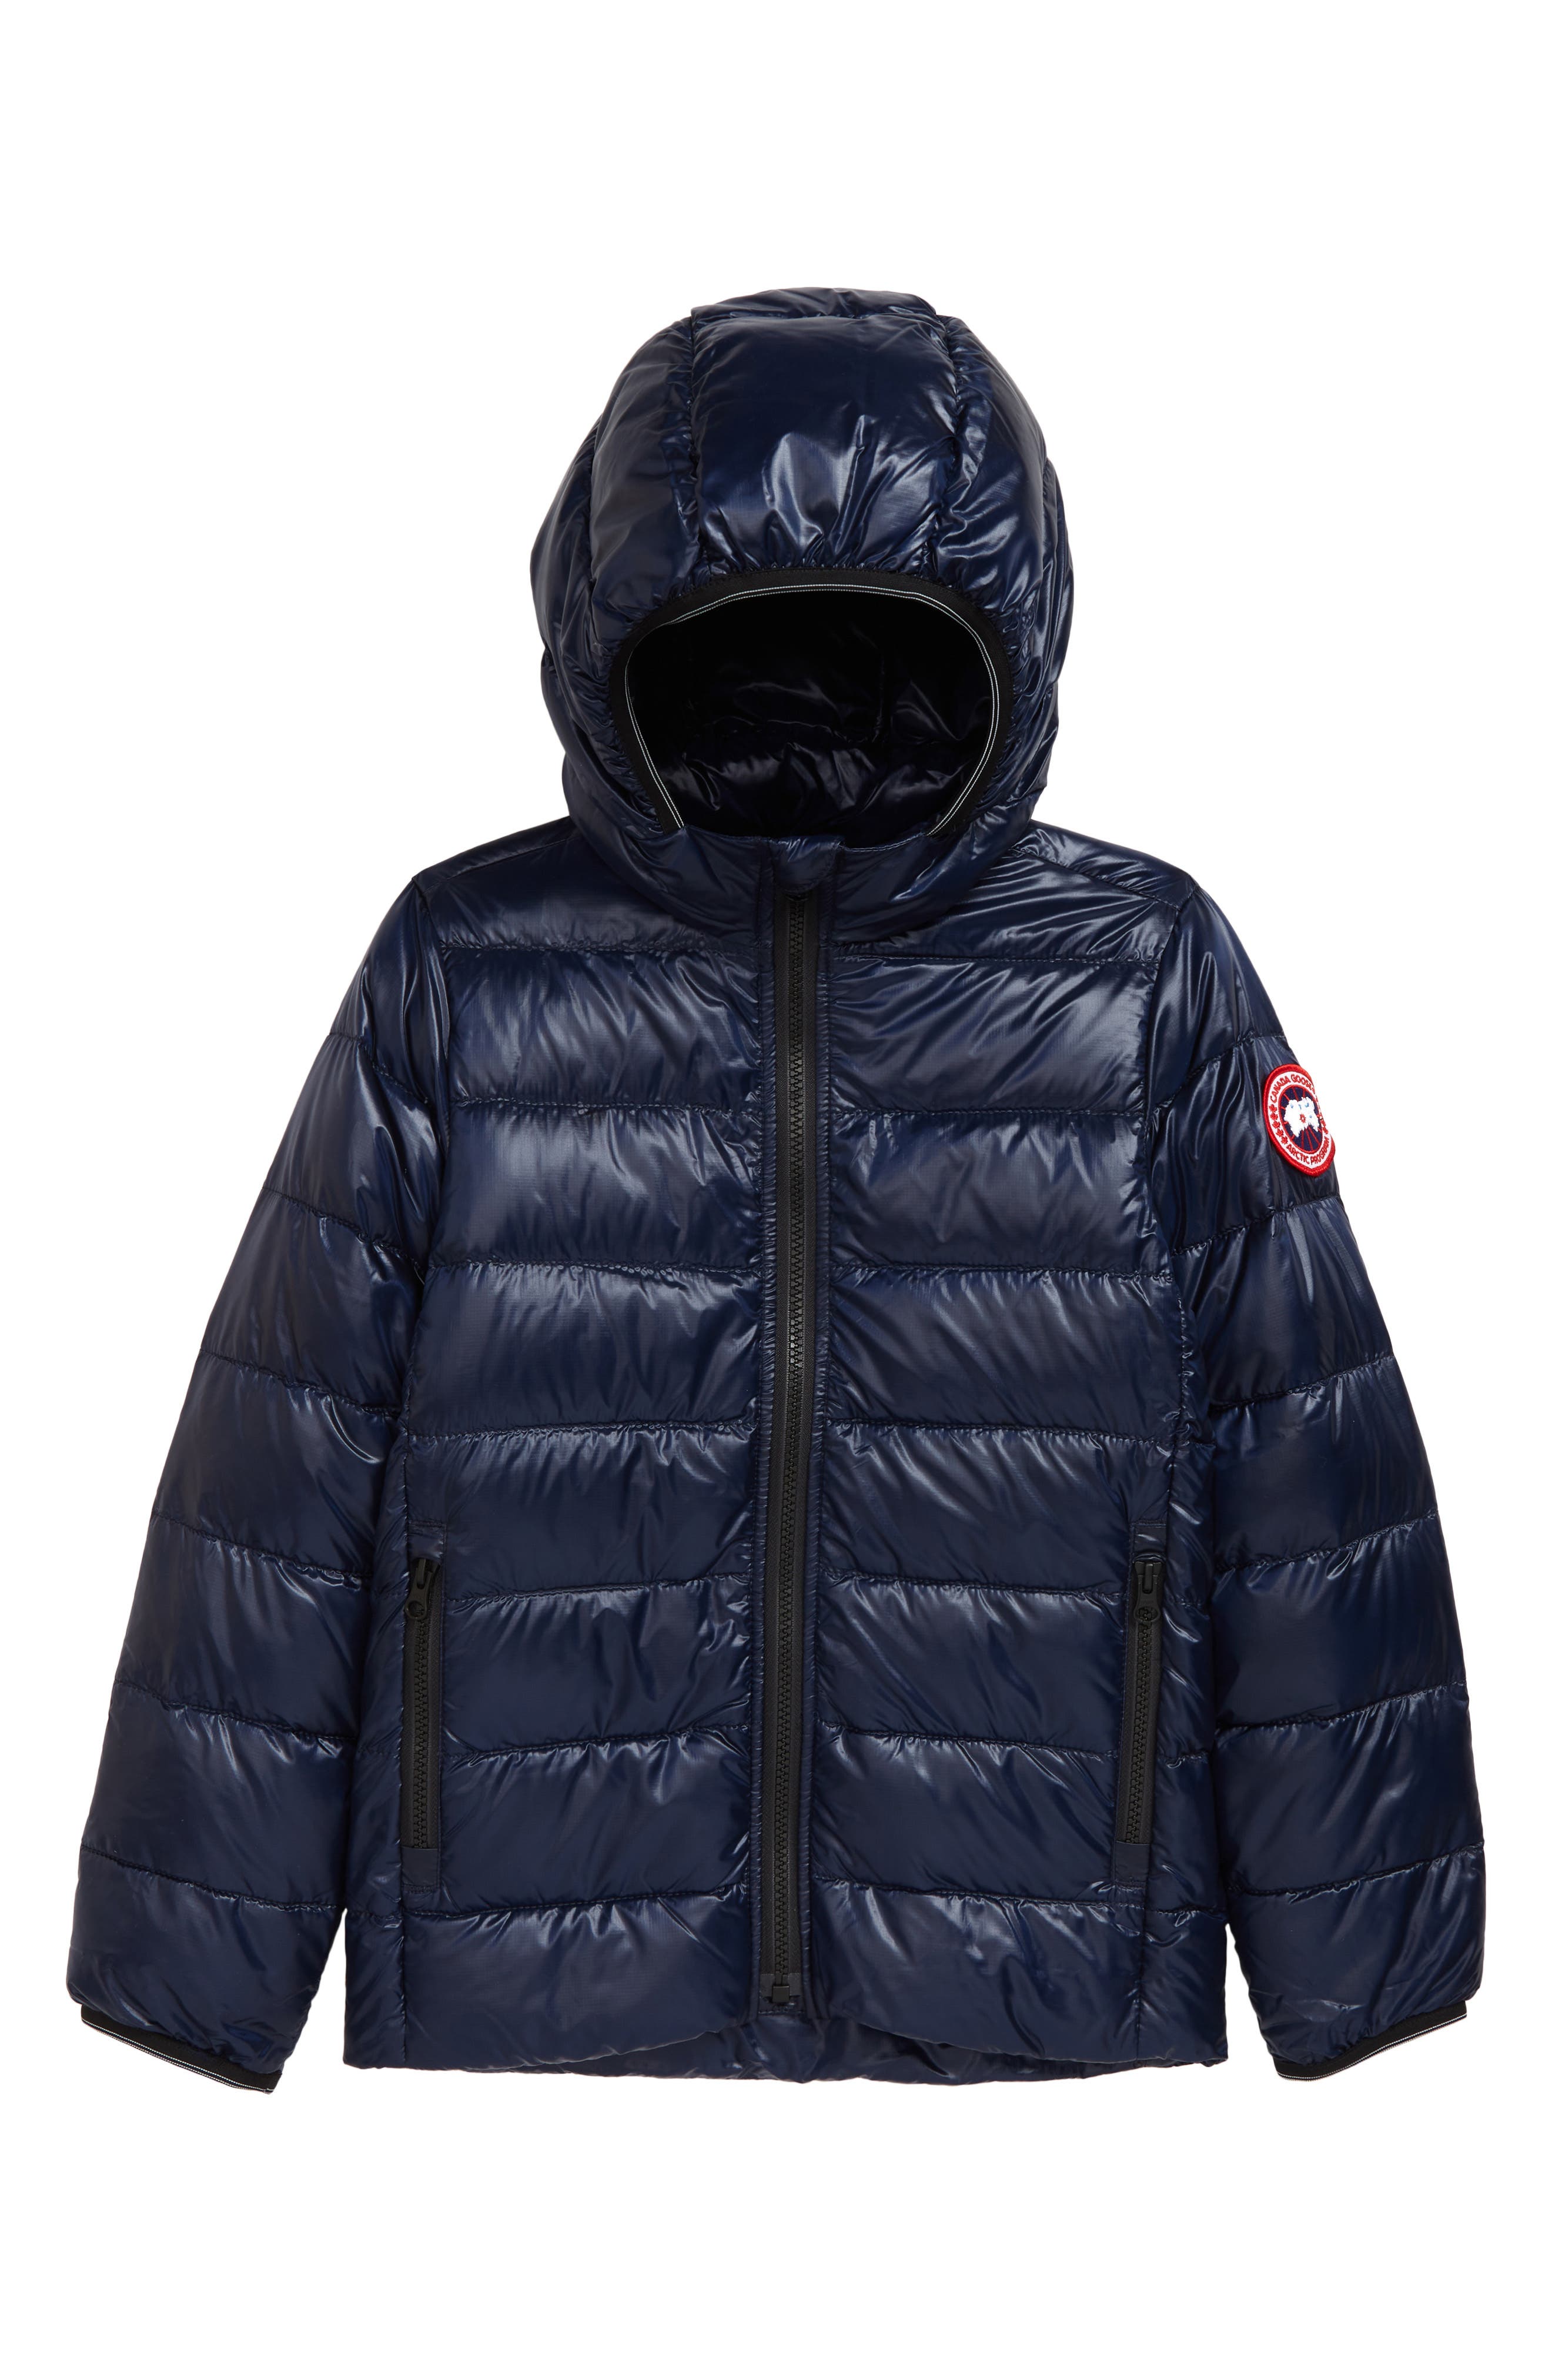 Canada Goose Canada Black Super Triple Goose Boys Kids Winter Parka Jacket Coat Size 7 